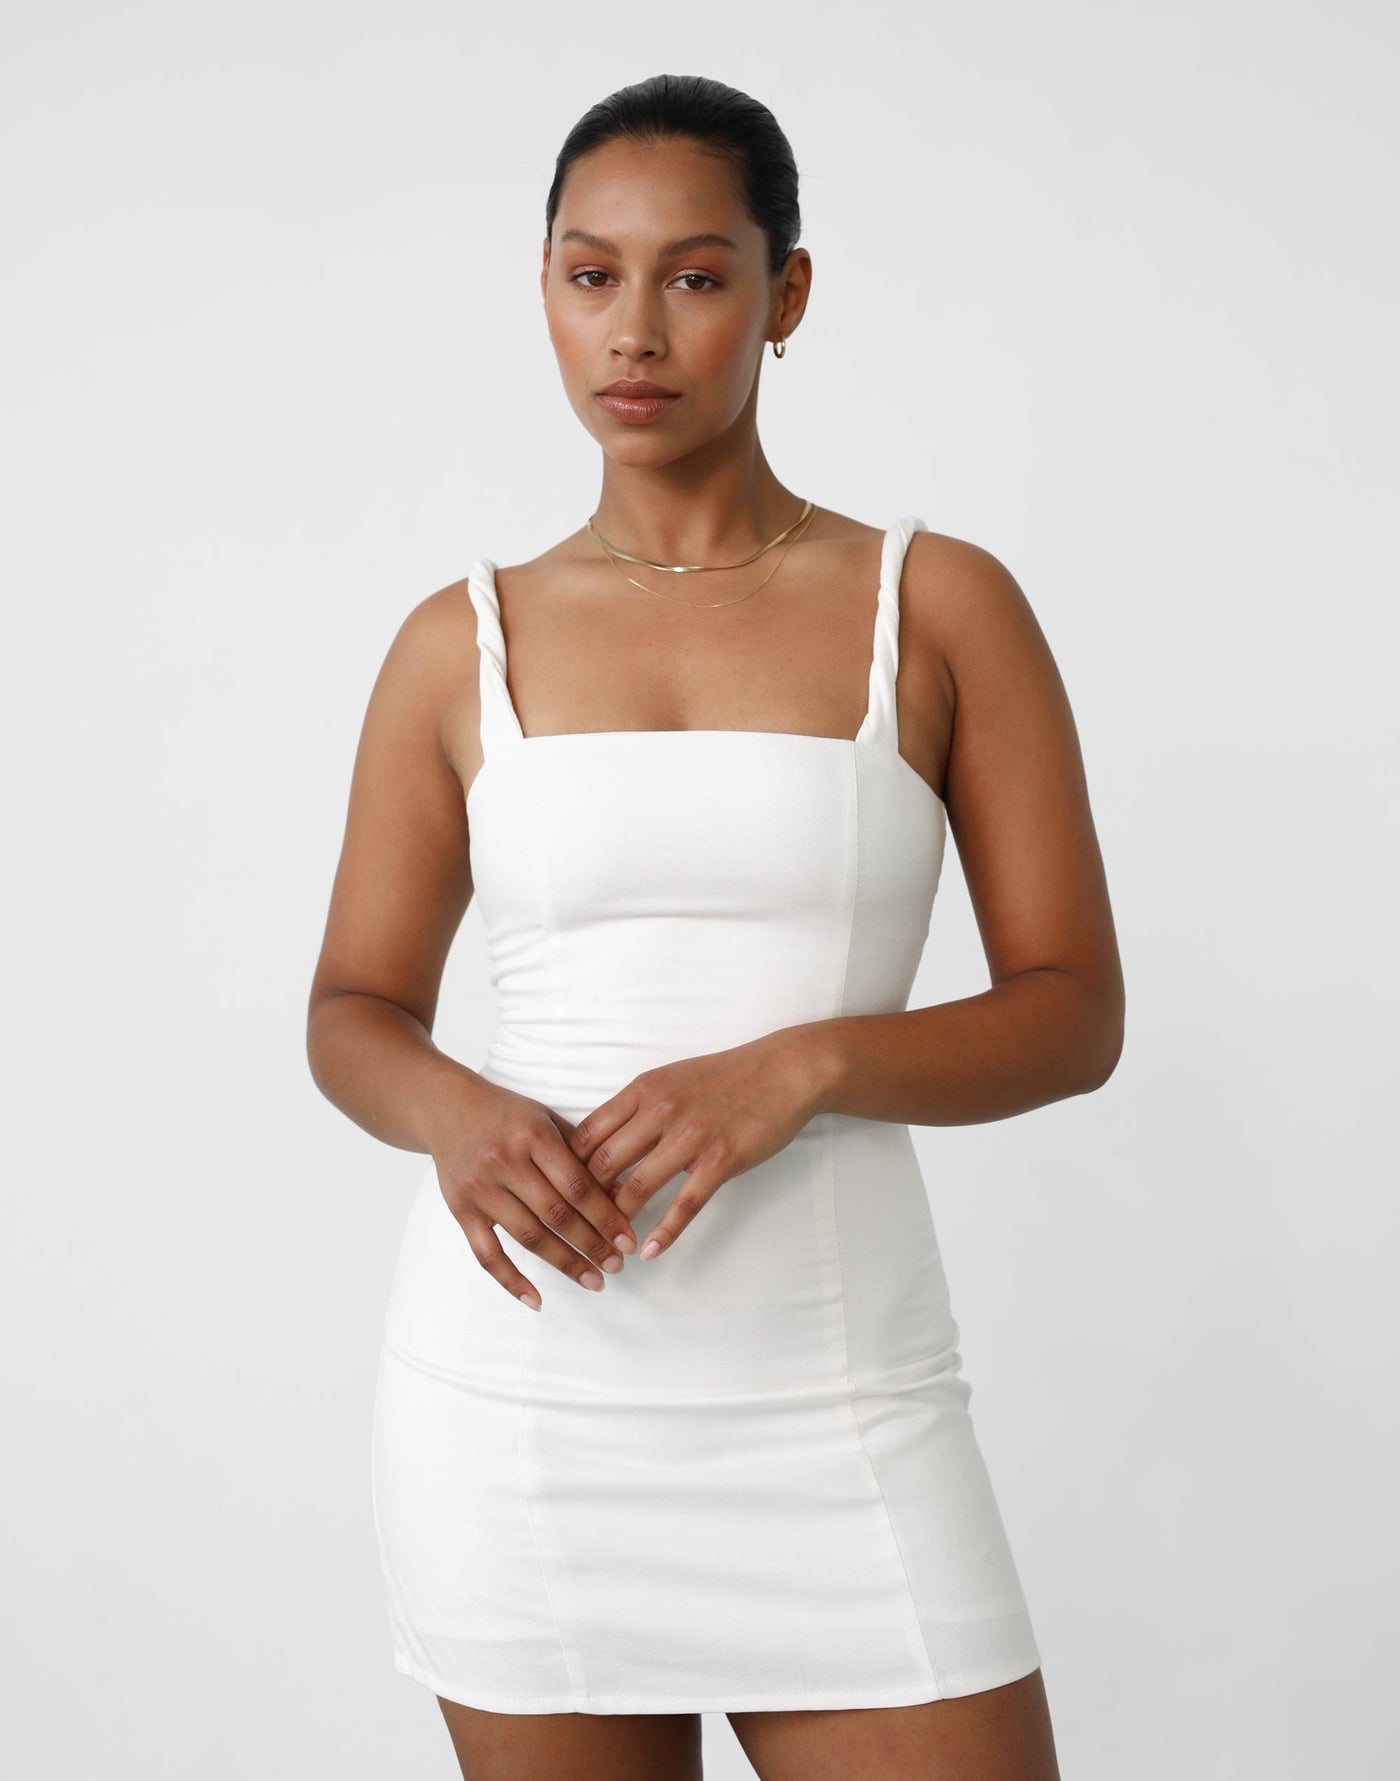 Bacalar Mini Dress (White) - White Mini Dress - Women's Dress - Charcoal Clothing